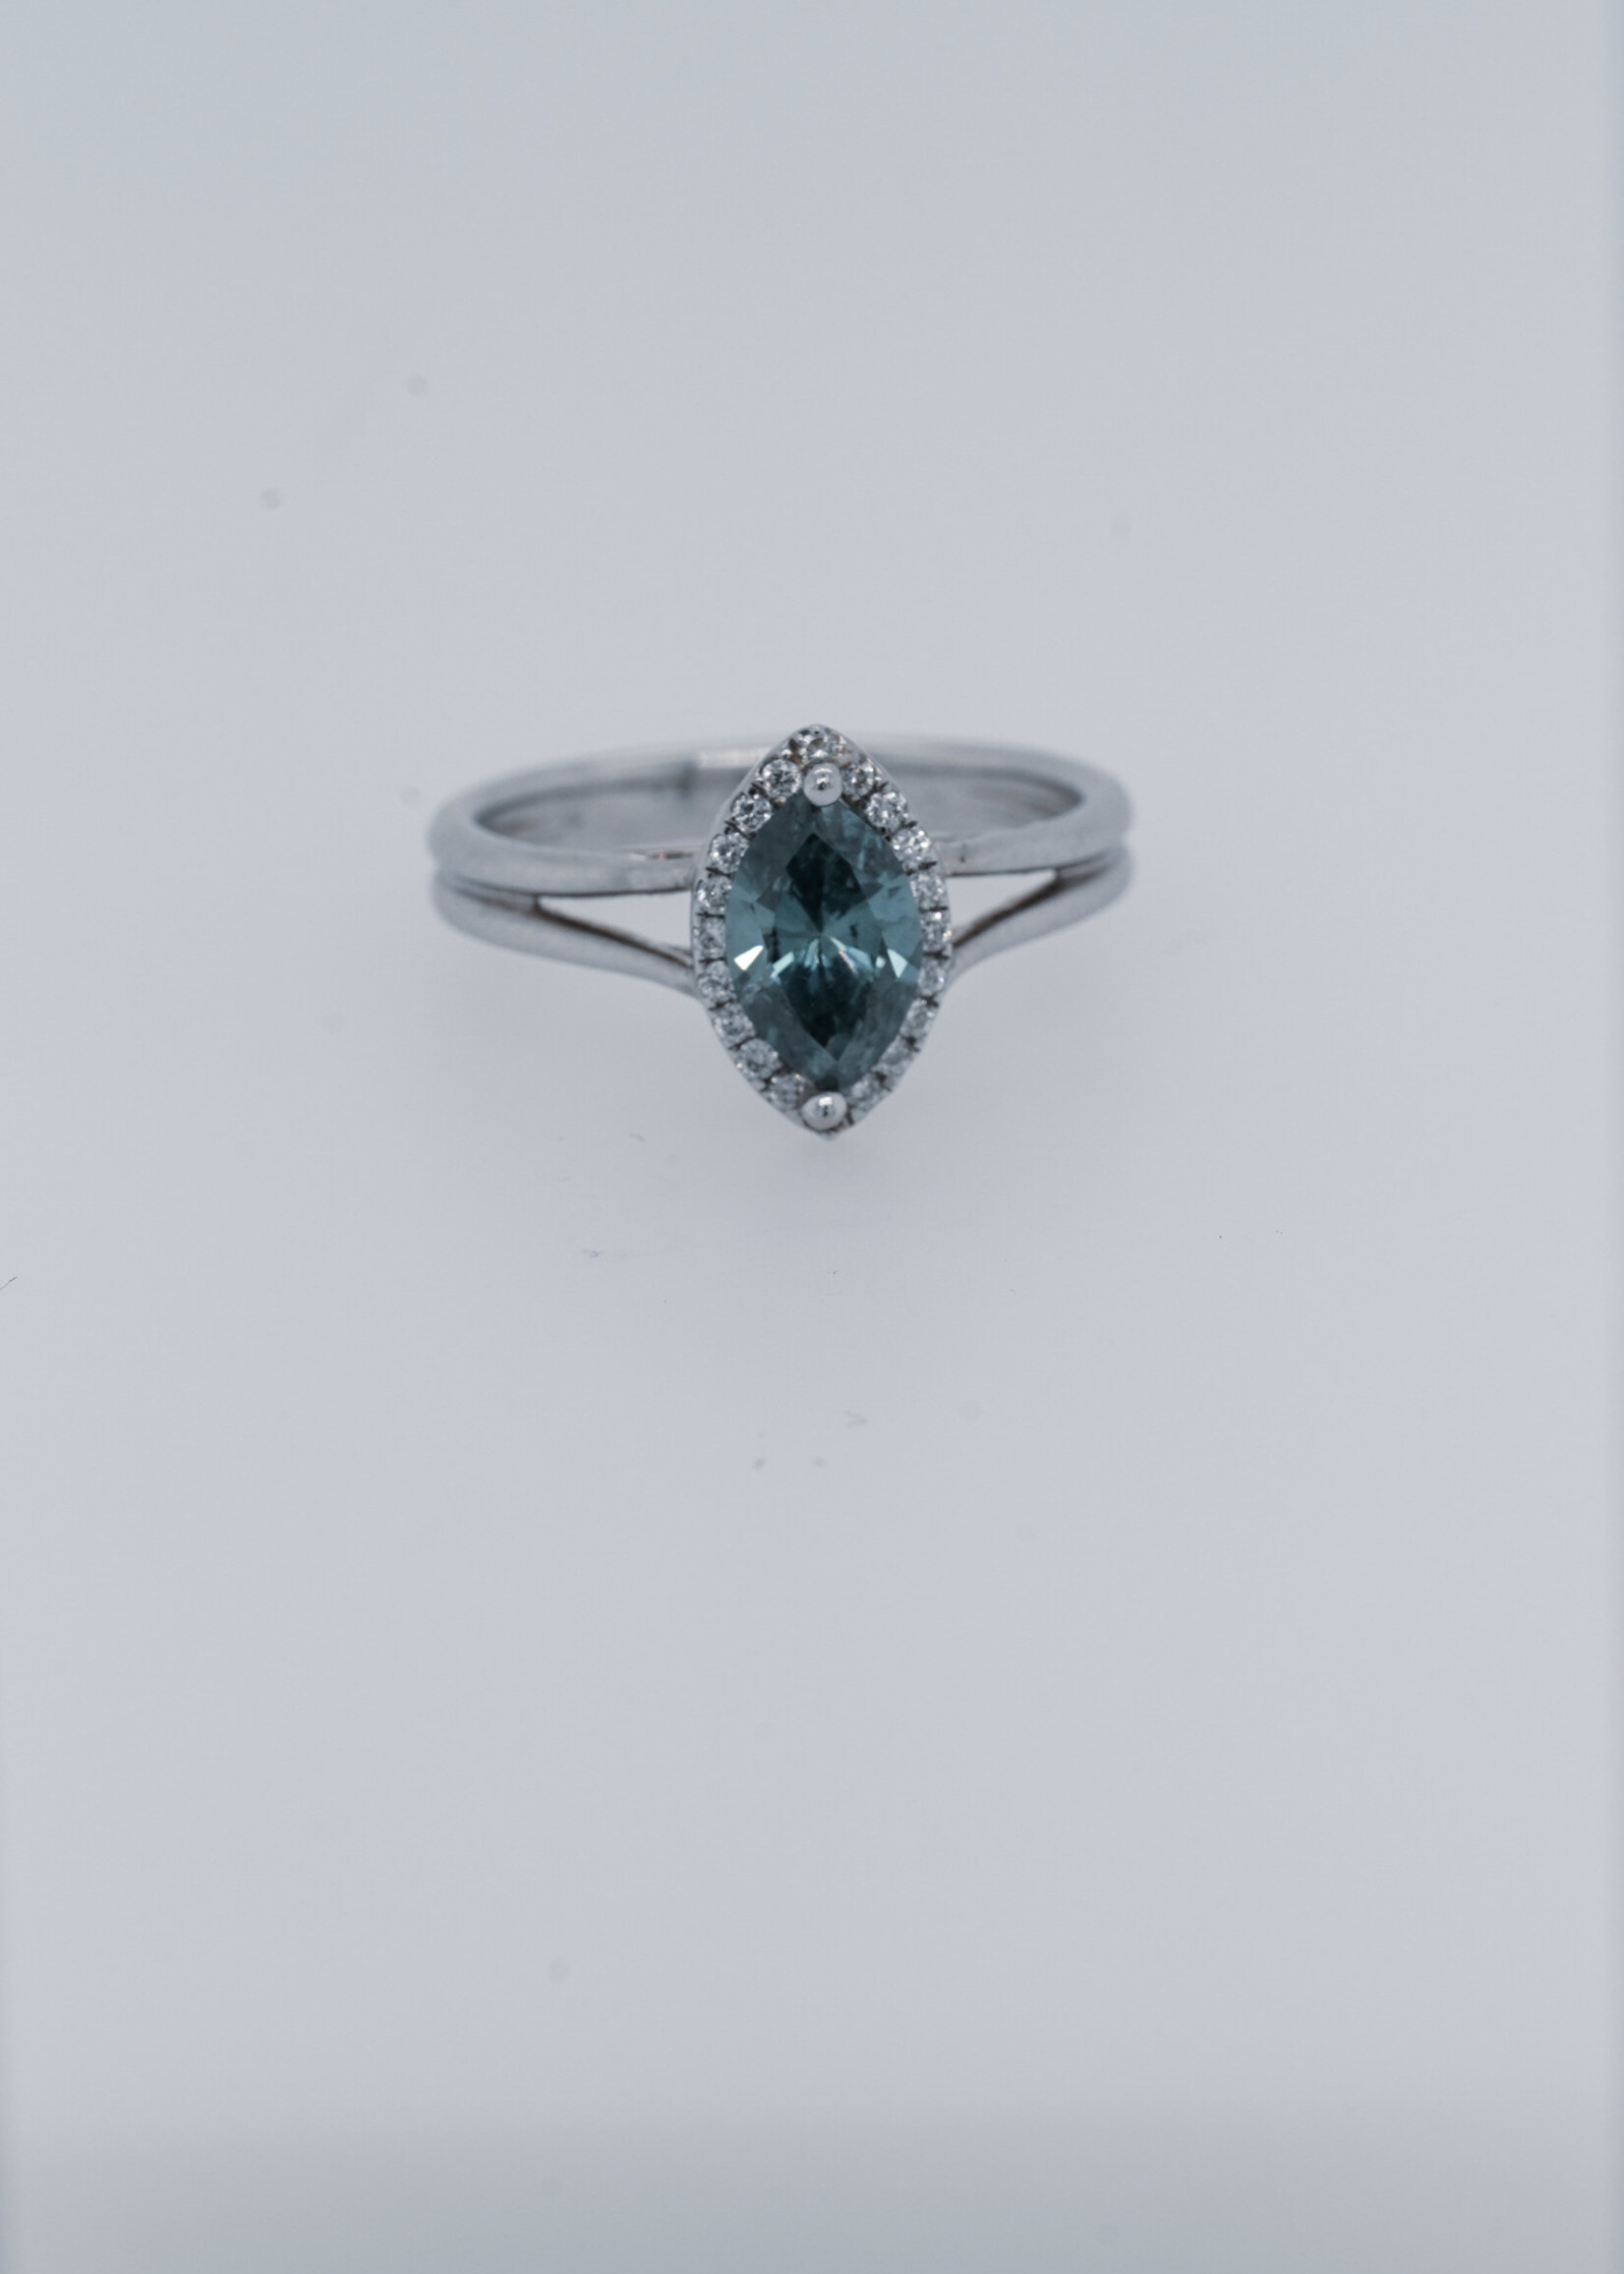 14KW 3.42g 1.25ctw (1.01ctr) Blue/I1 Marquise Diamond Halo Engagement Ring (size 7)